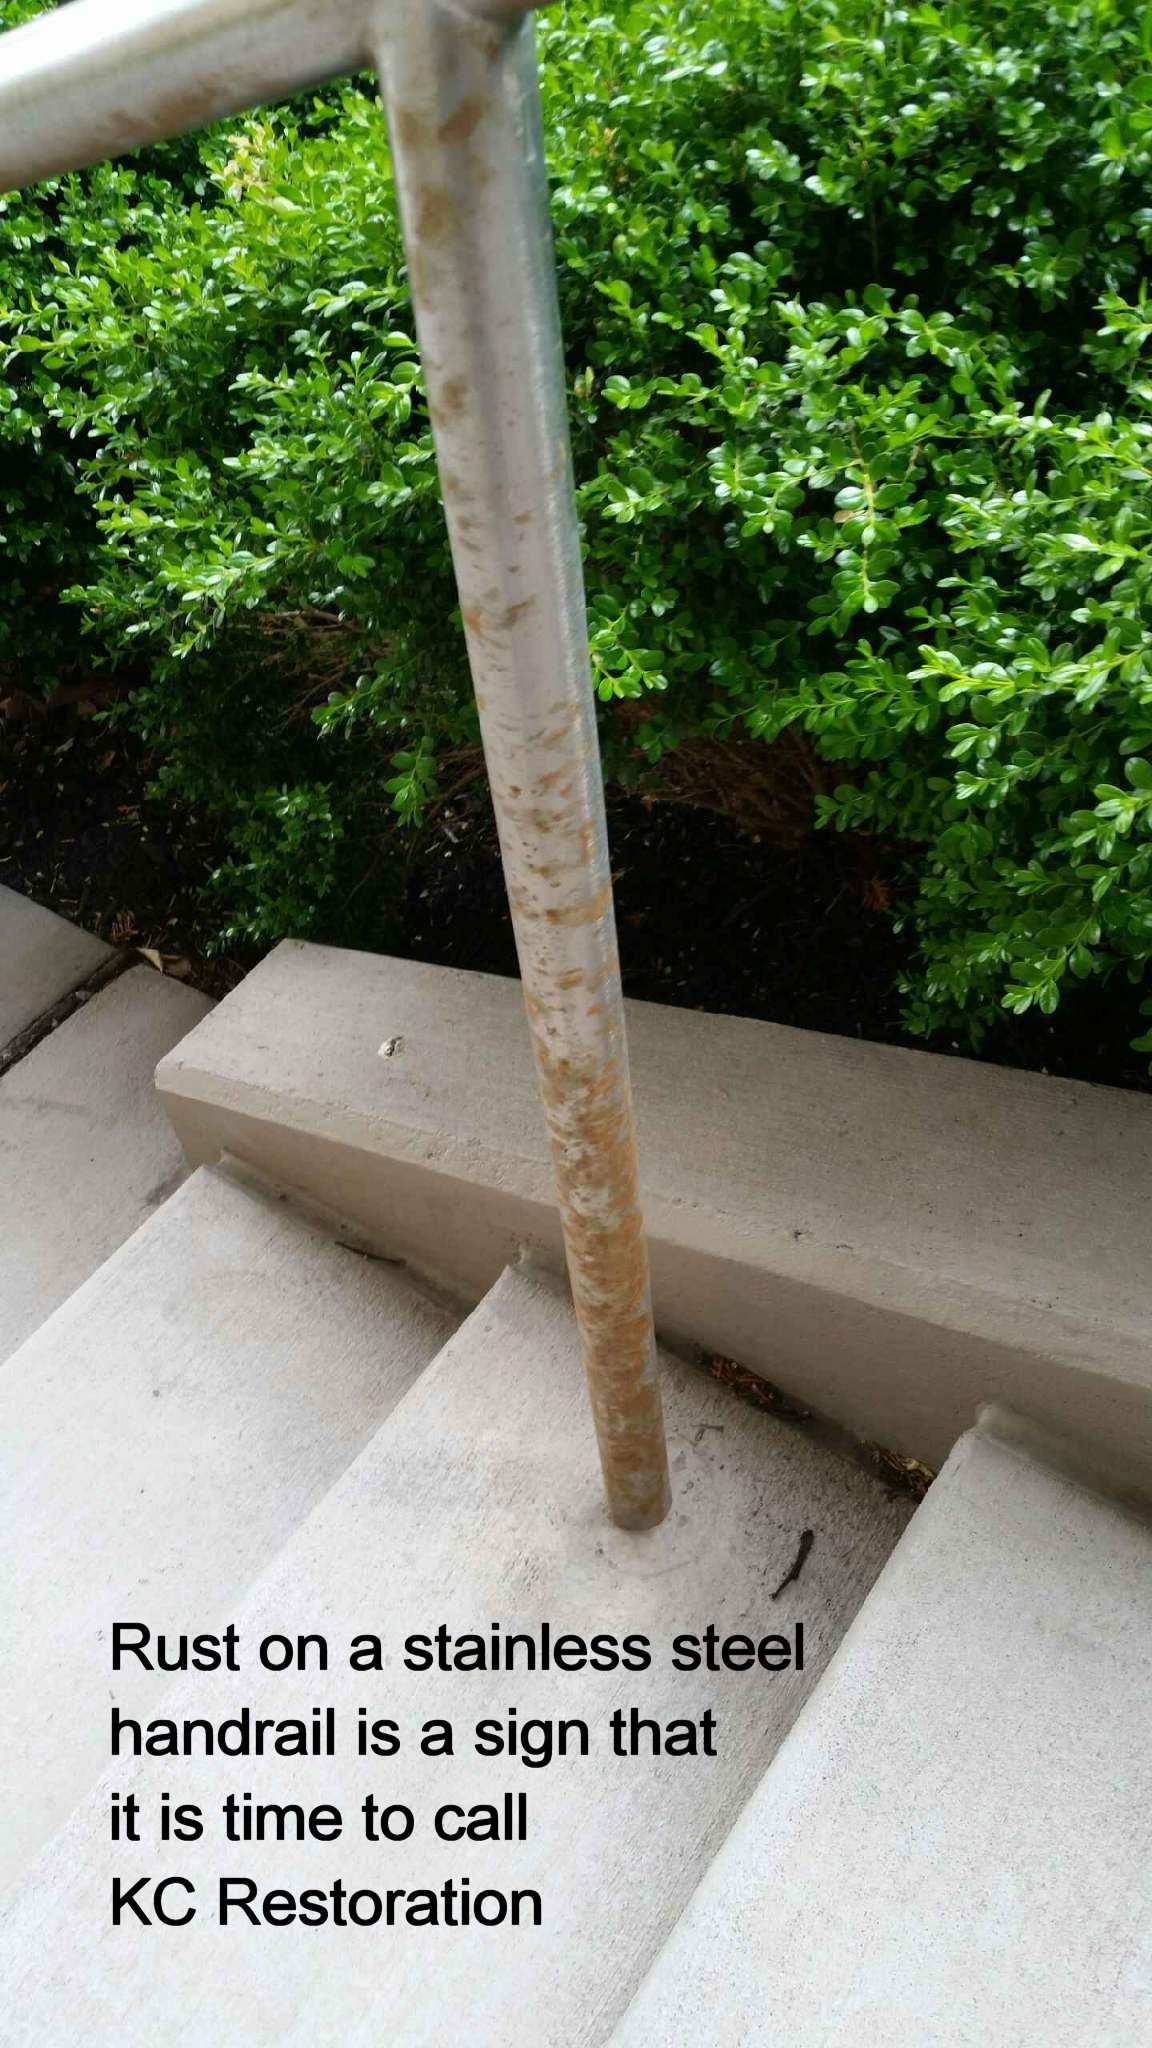 Handrail rust